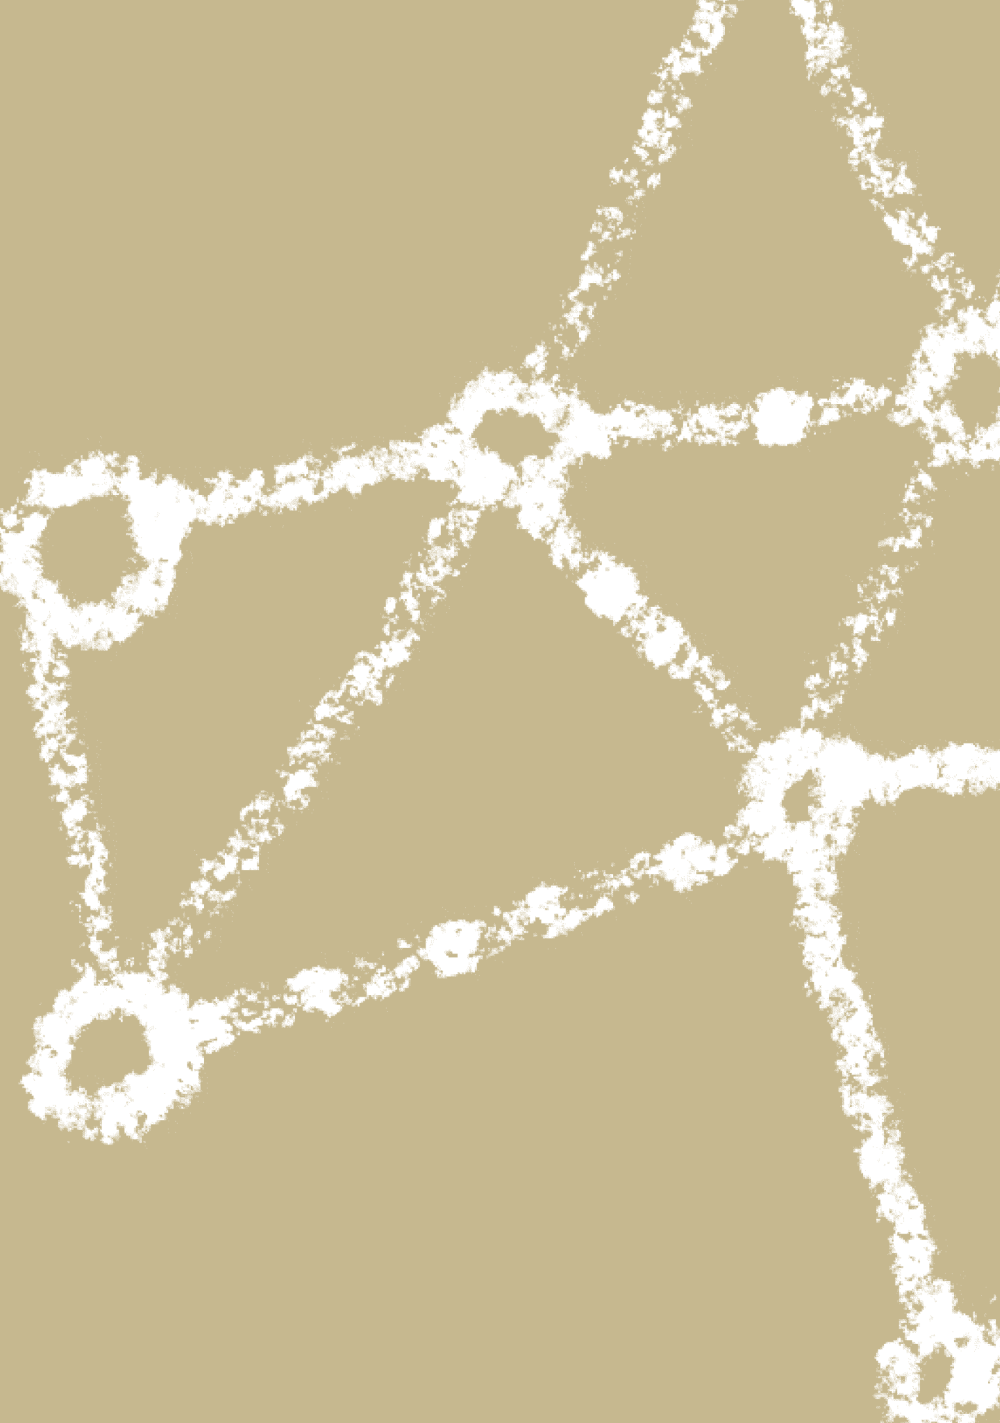 brown - white network